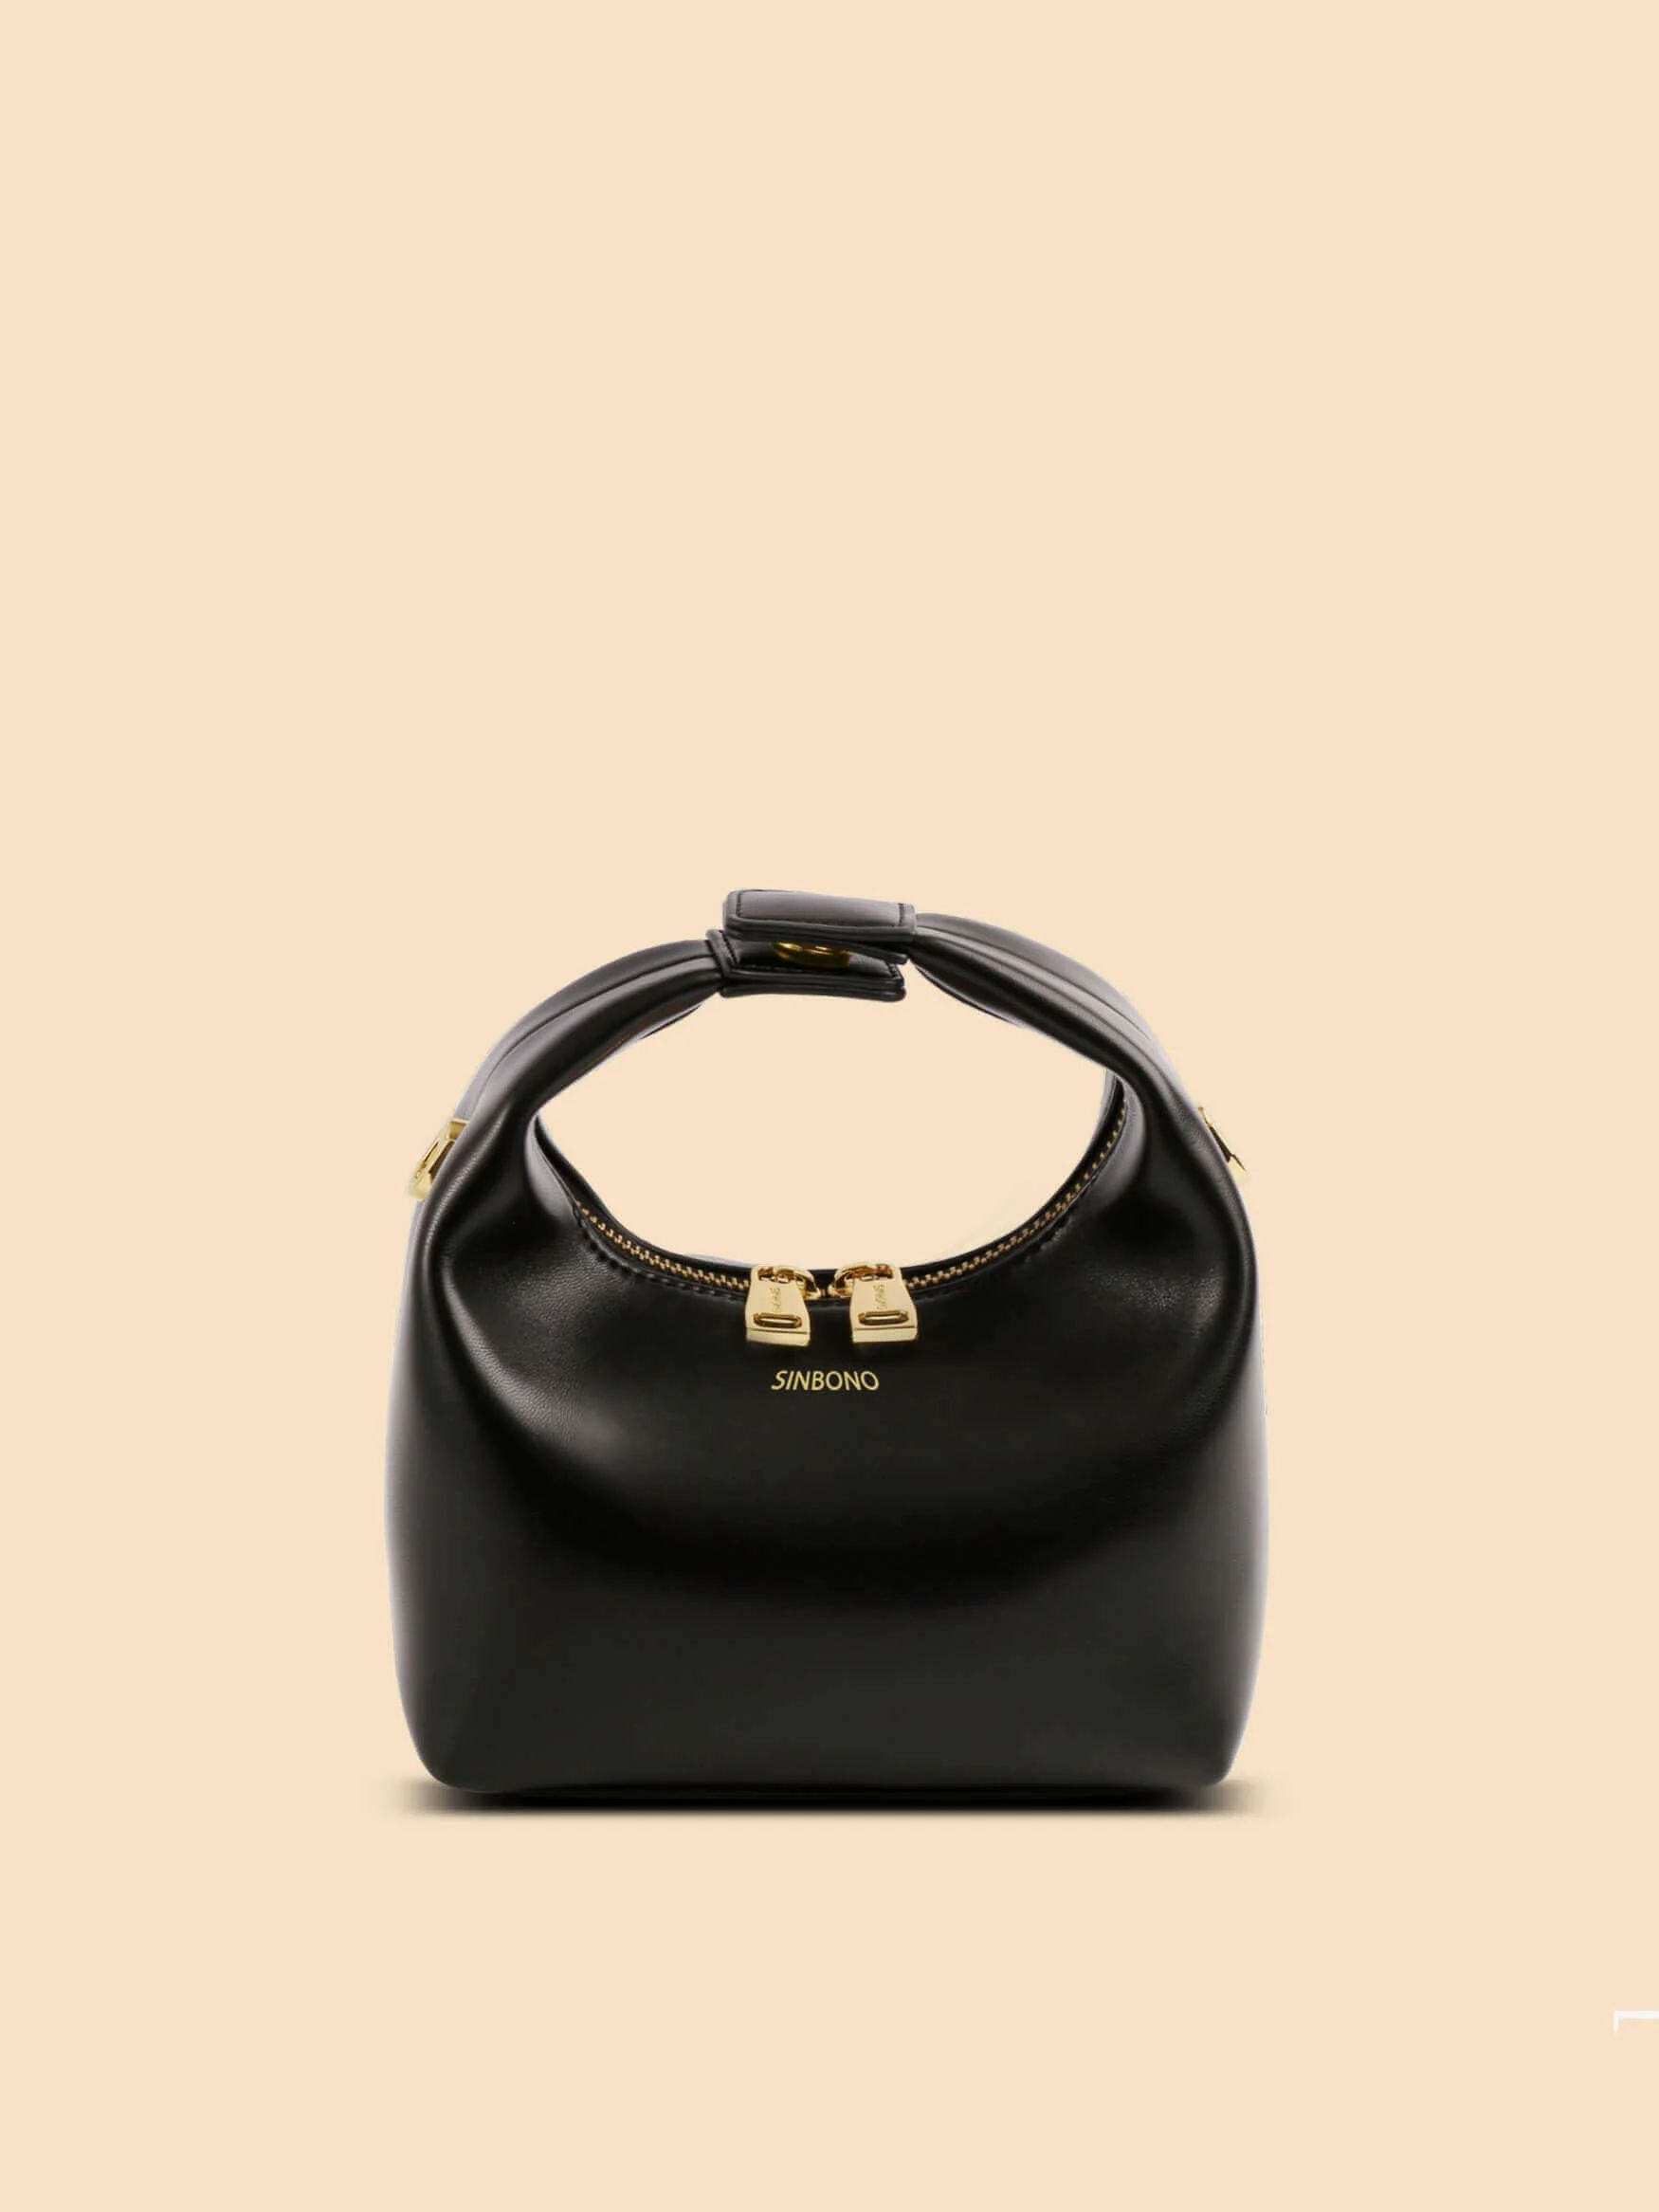 Women Fashion Black Vegan Leather Handbags | Crossbody Bags -SINBONO | SINBONO INC.